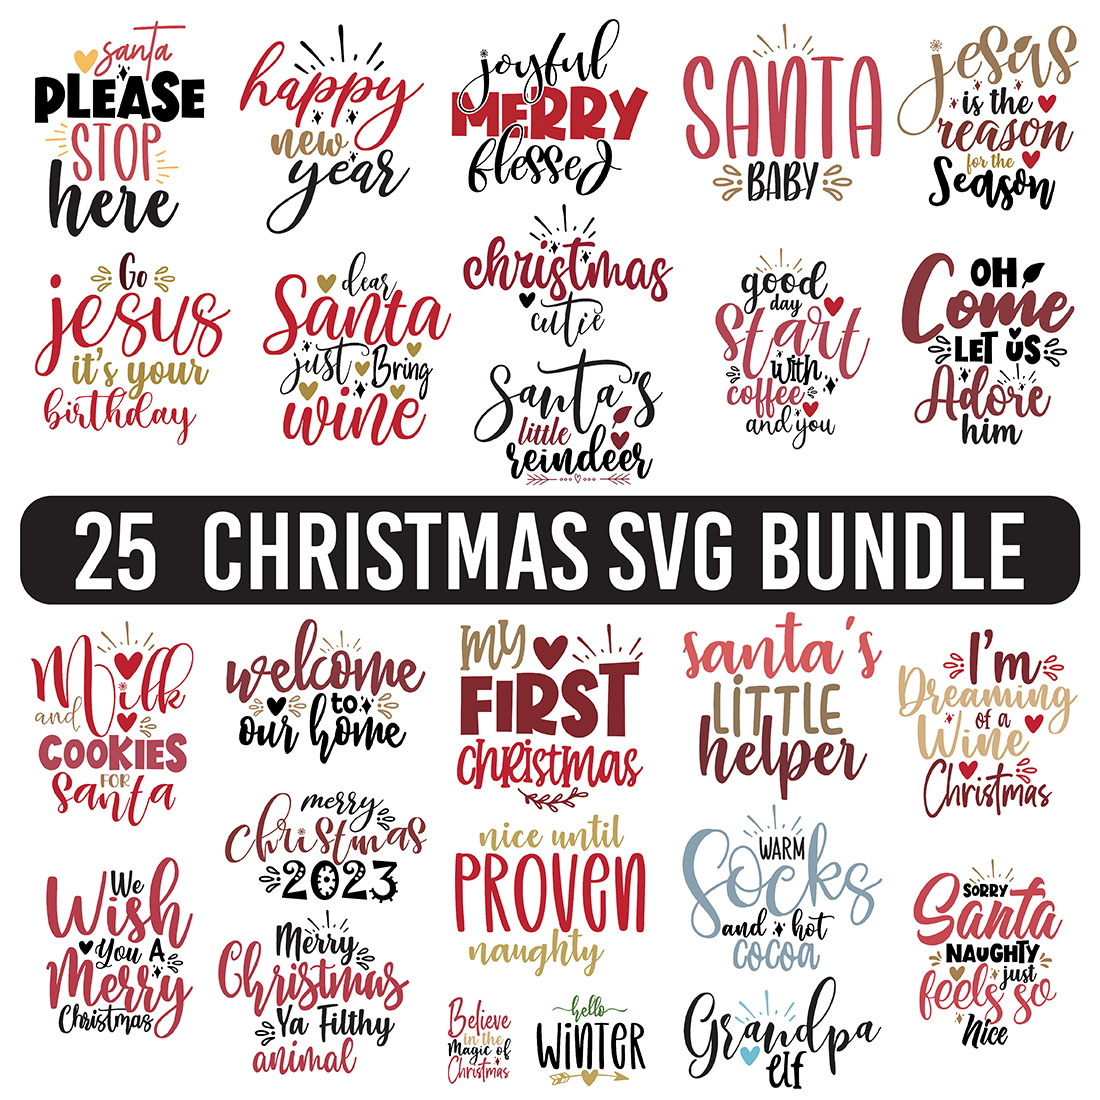 25 Christmas SVG Bundle - main image preview.